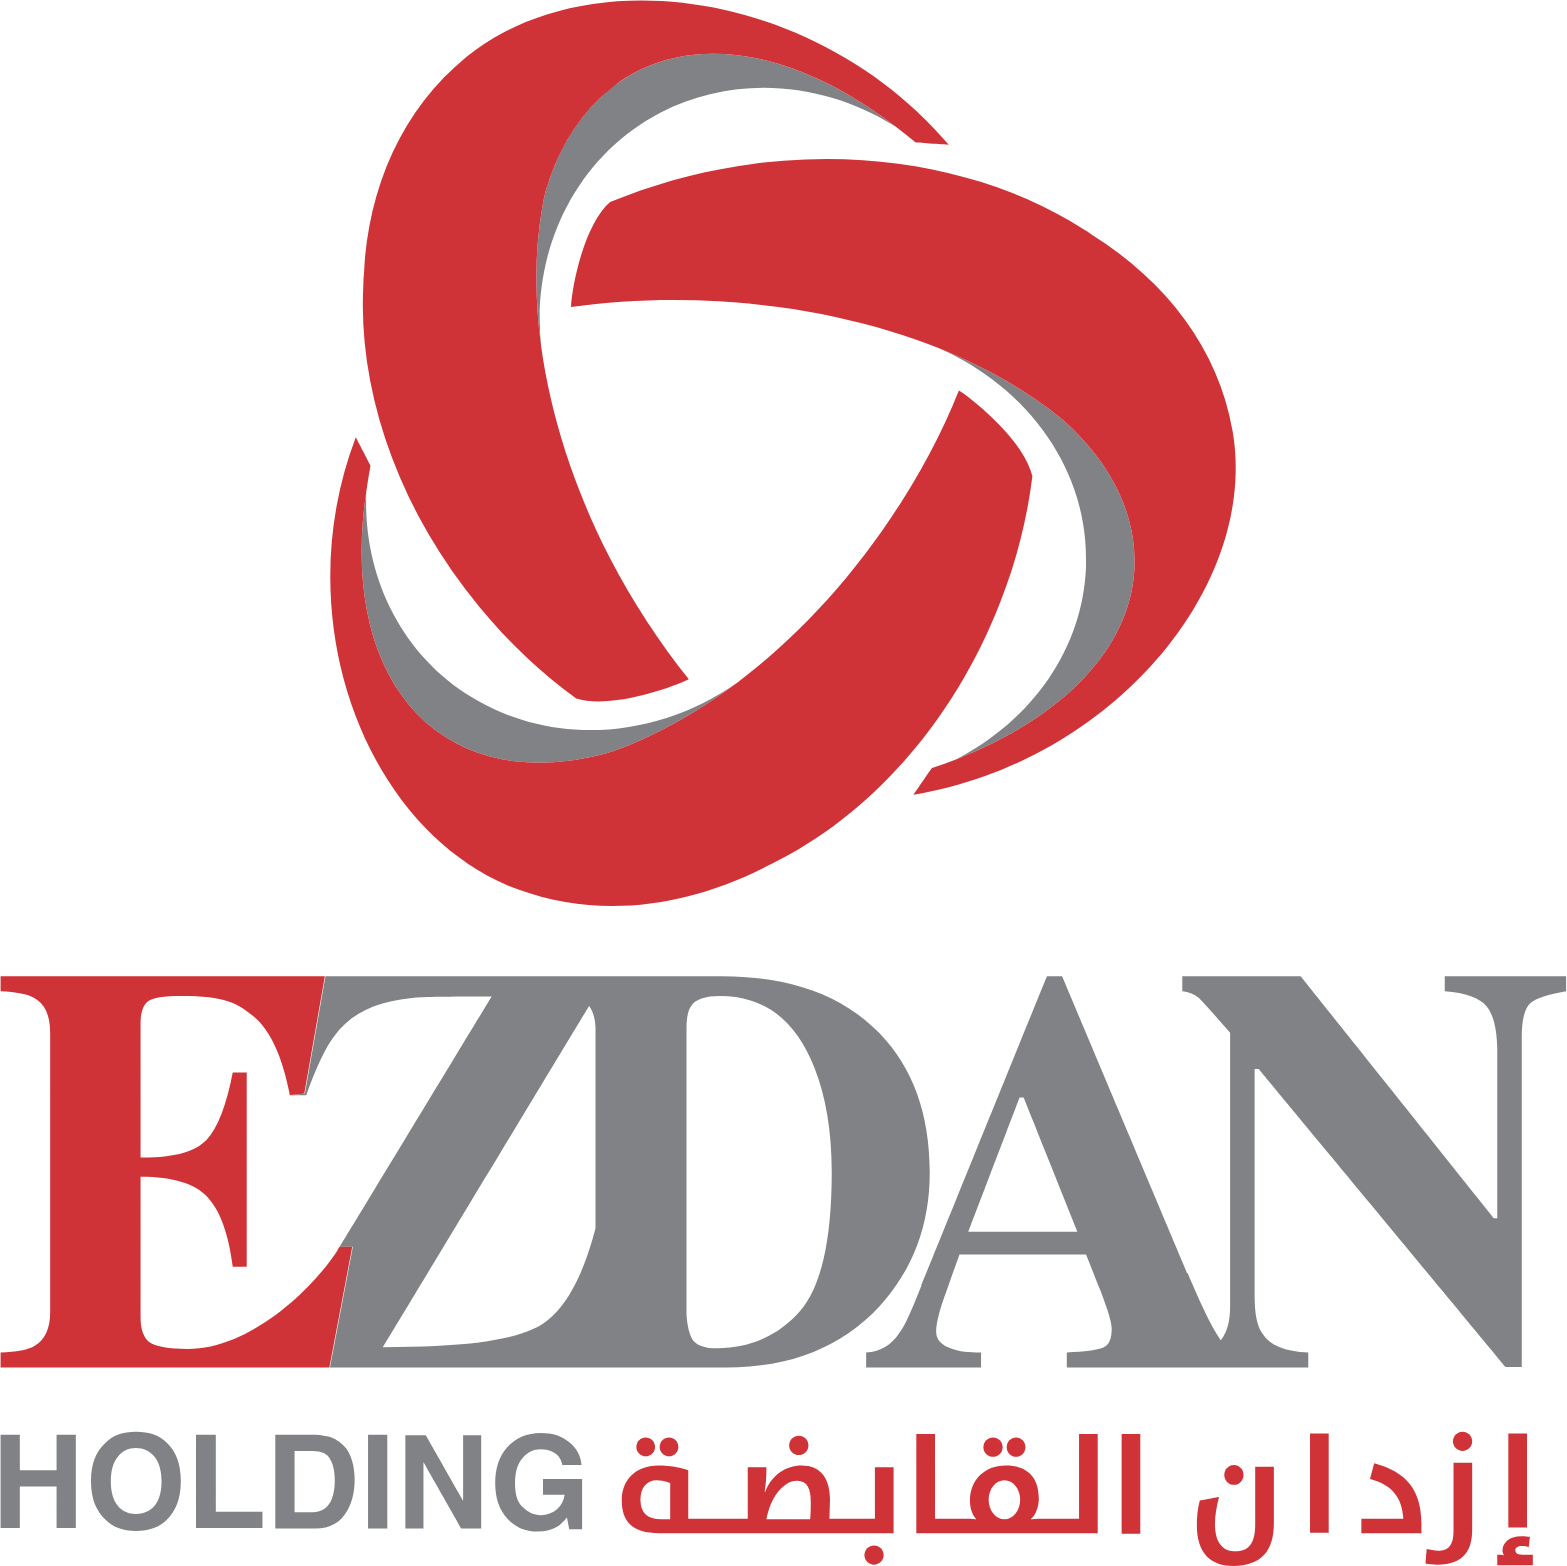 Ezdan Holding Group logo large (transparent PNG)